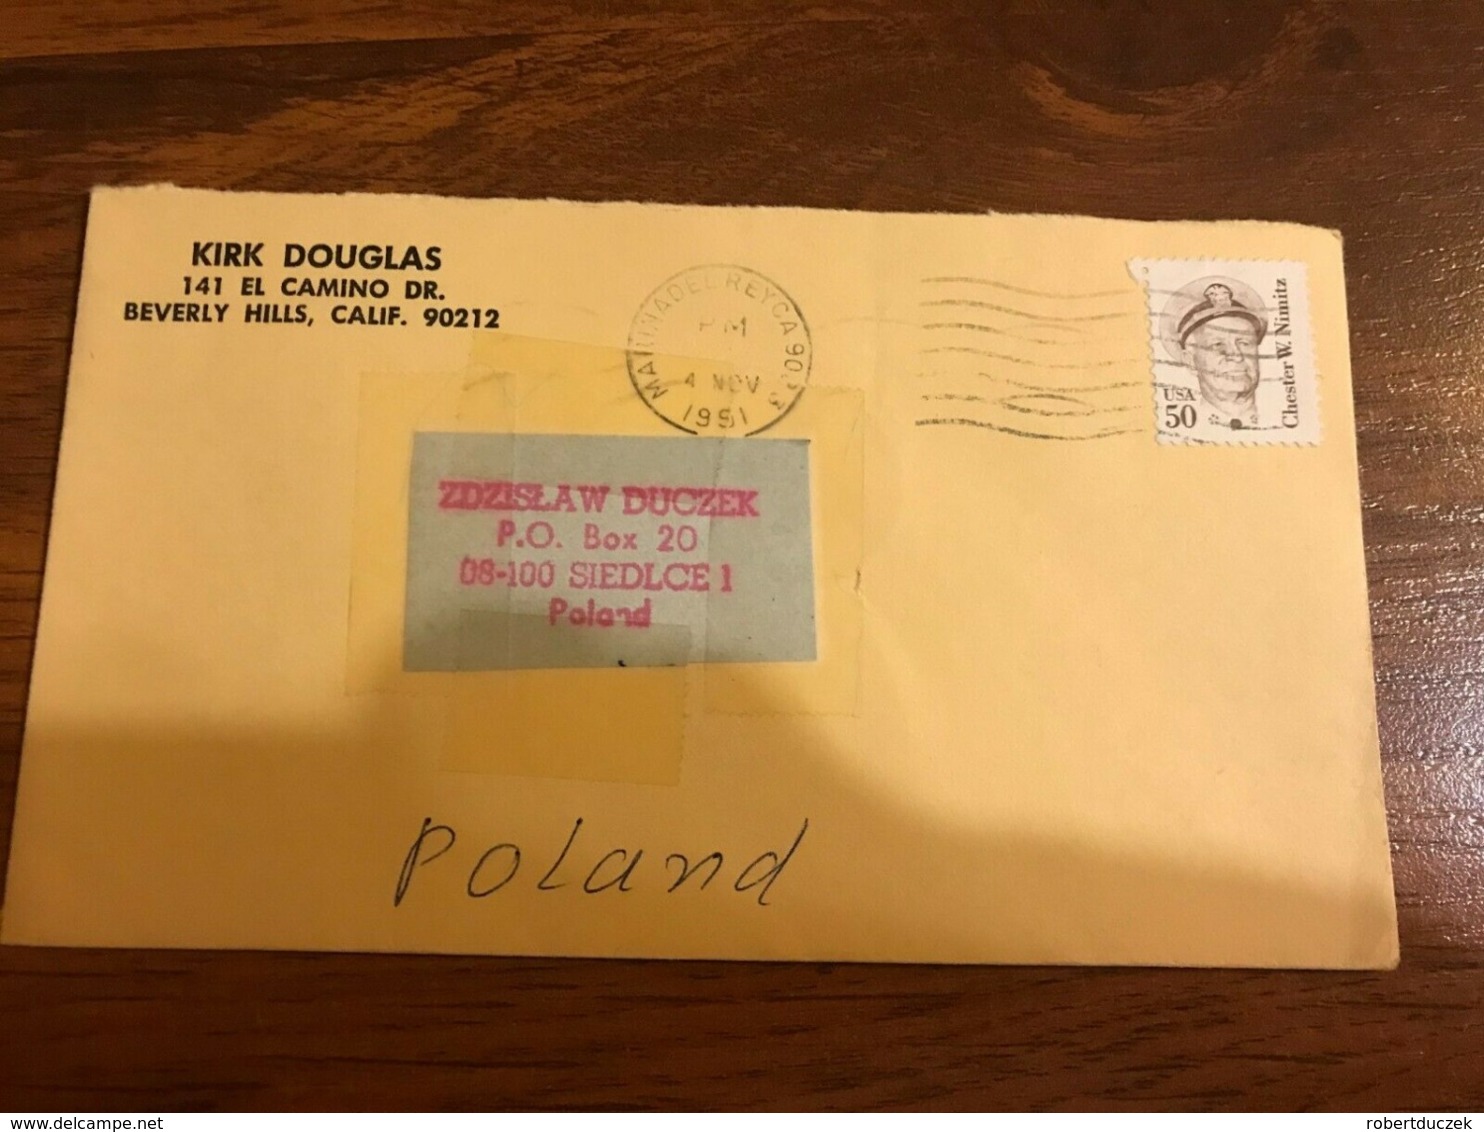 Kirk Douglas Photo Hand Signed Inscribed 10 X 15 Cm And Envelope - Foto Dedicate